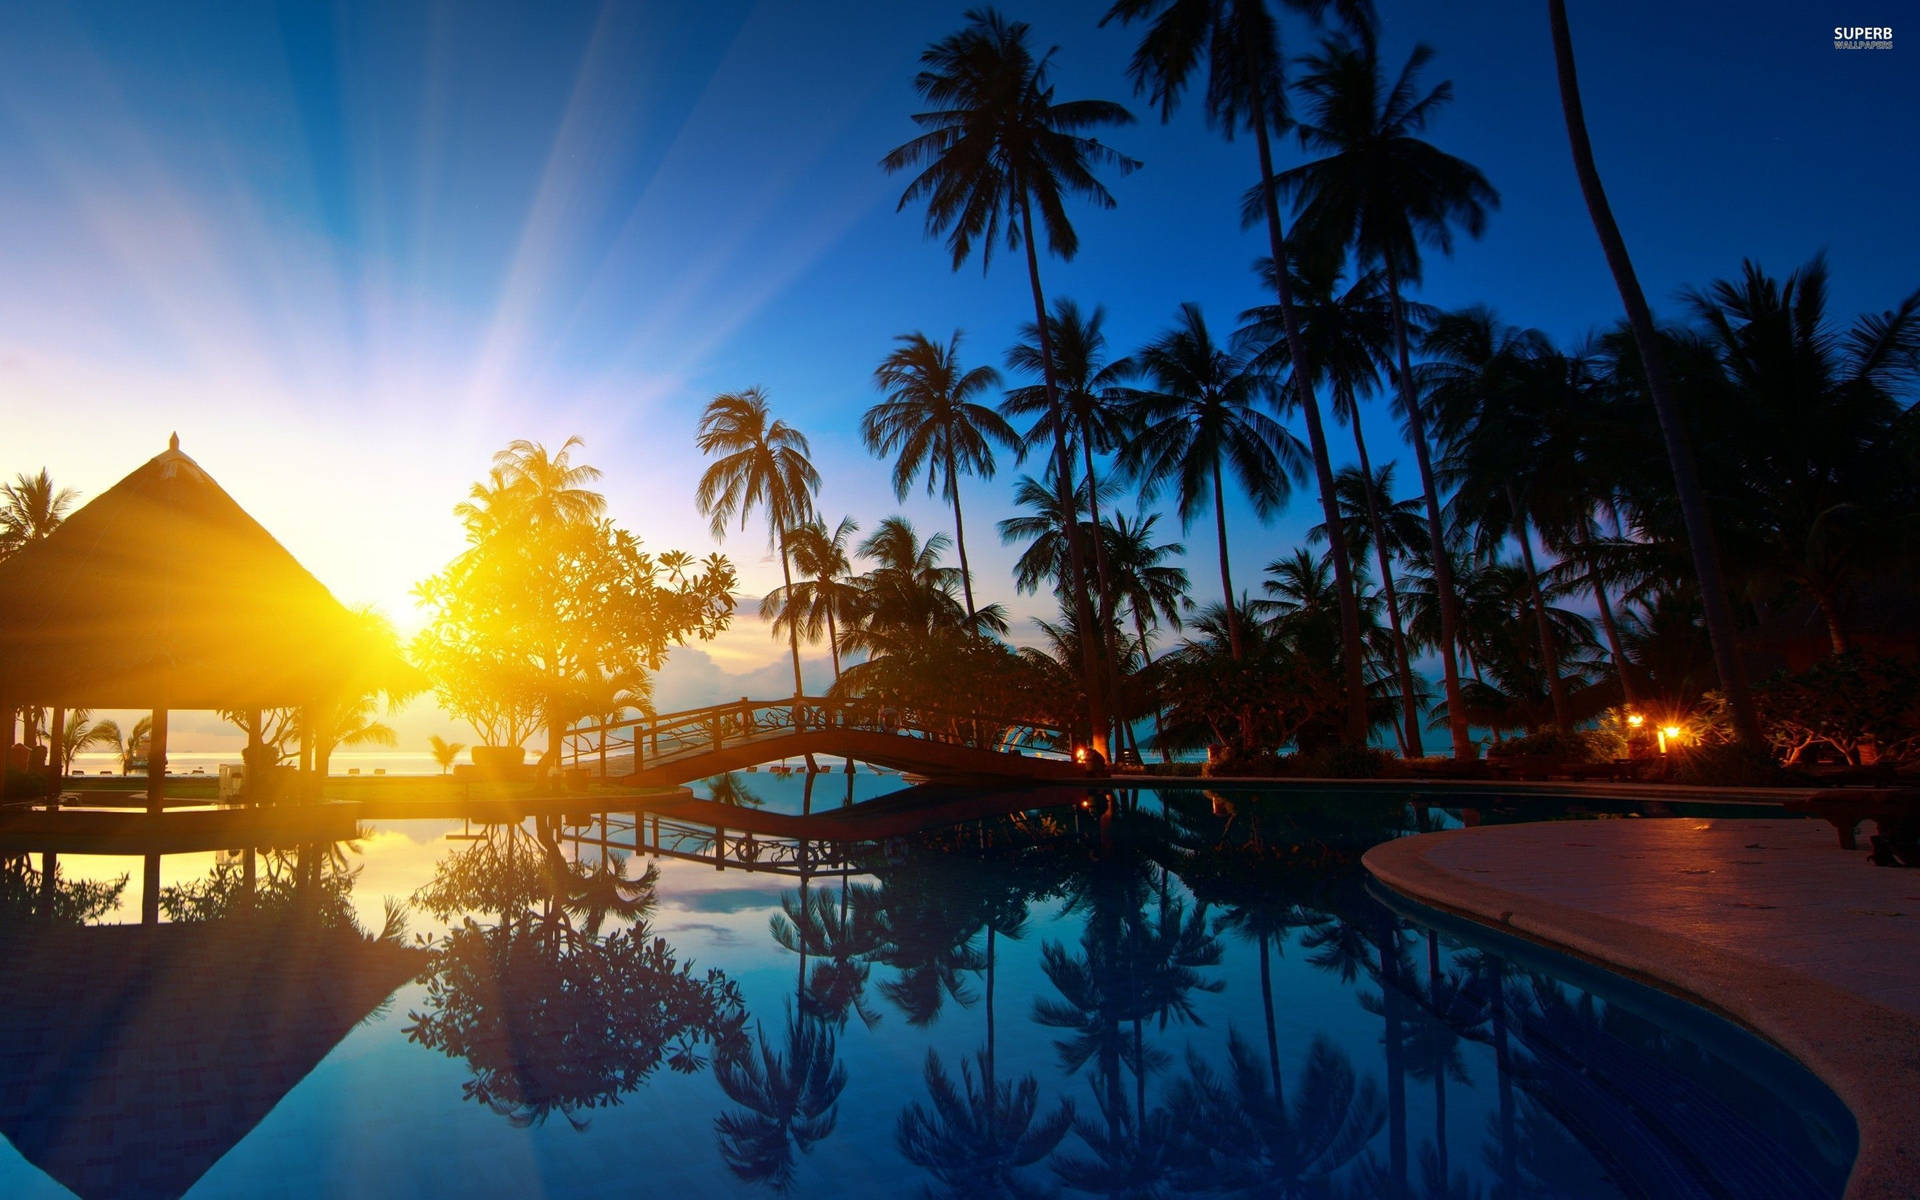 Thailand Tropical Resort Sunrise Screen Saver Wallpaper